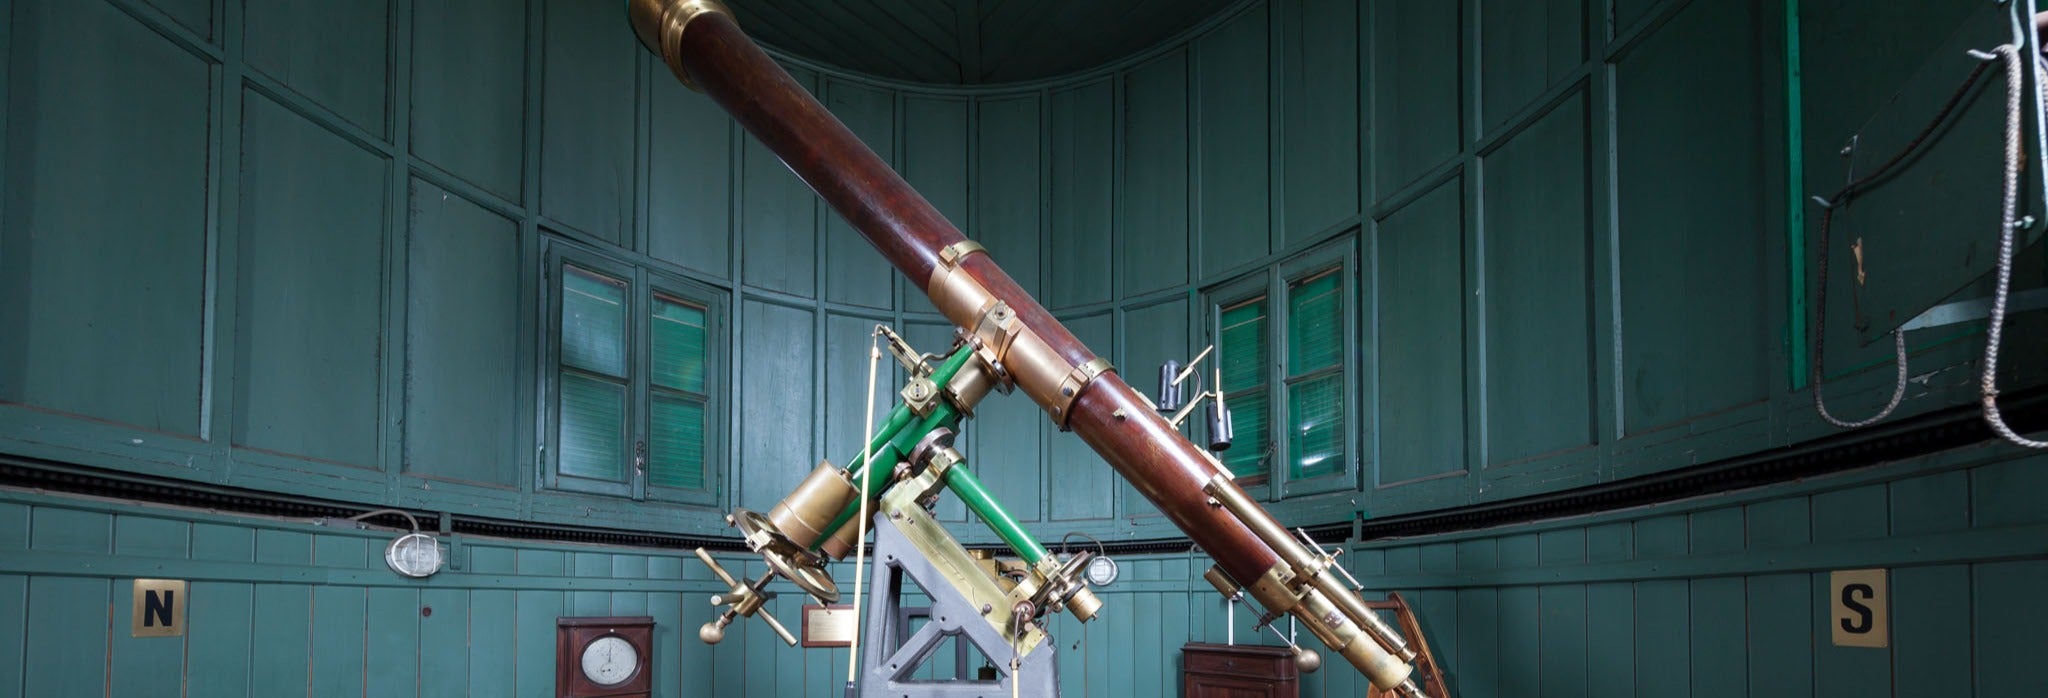 Astronomical Museum of Brera Ticket